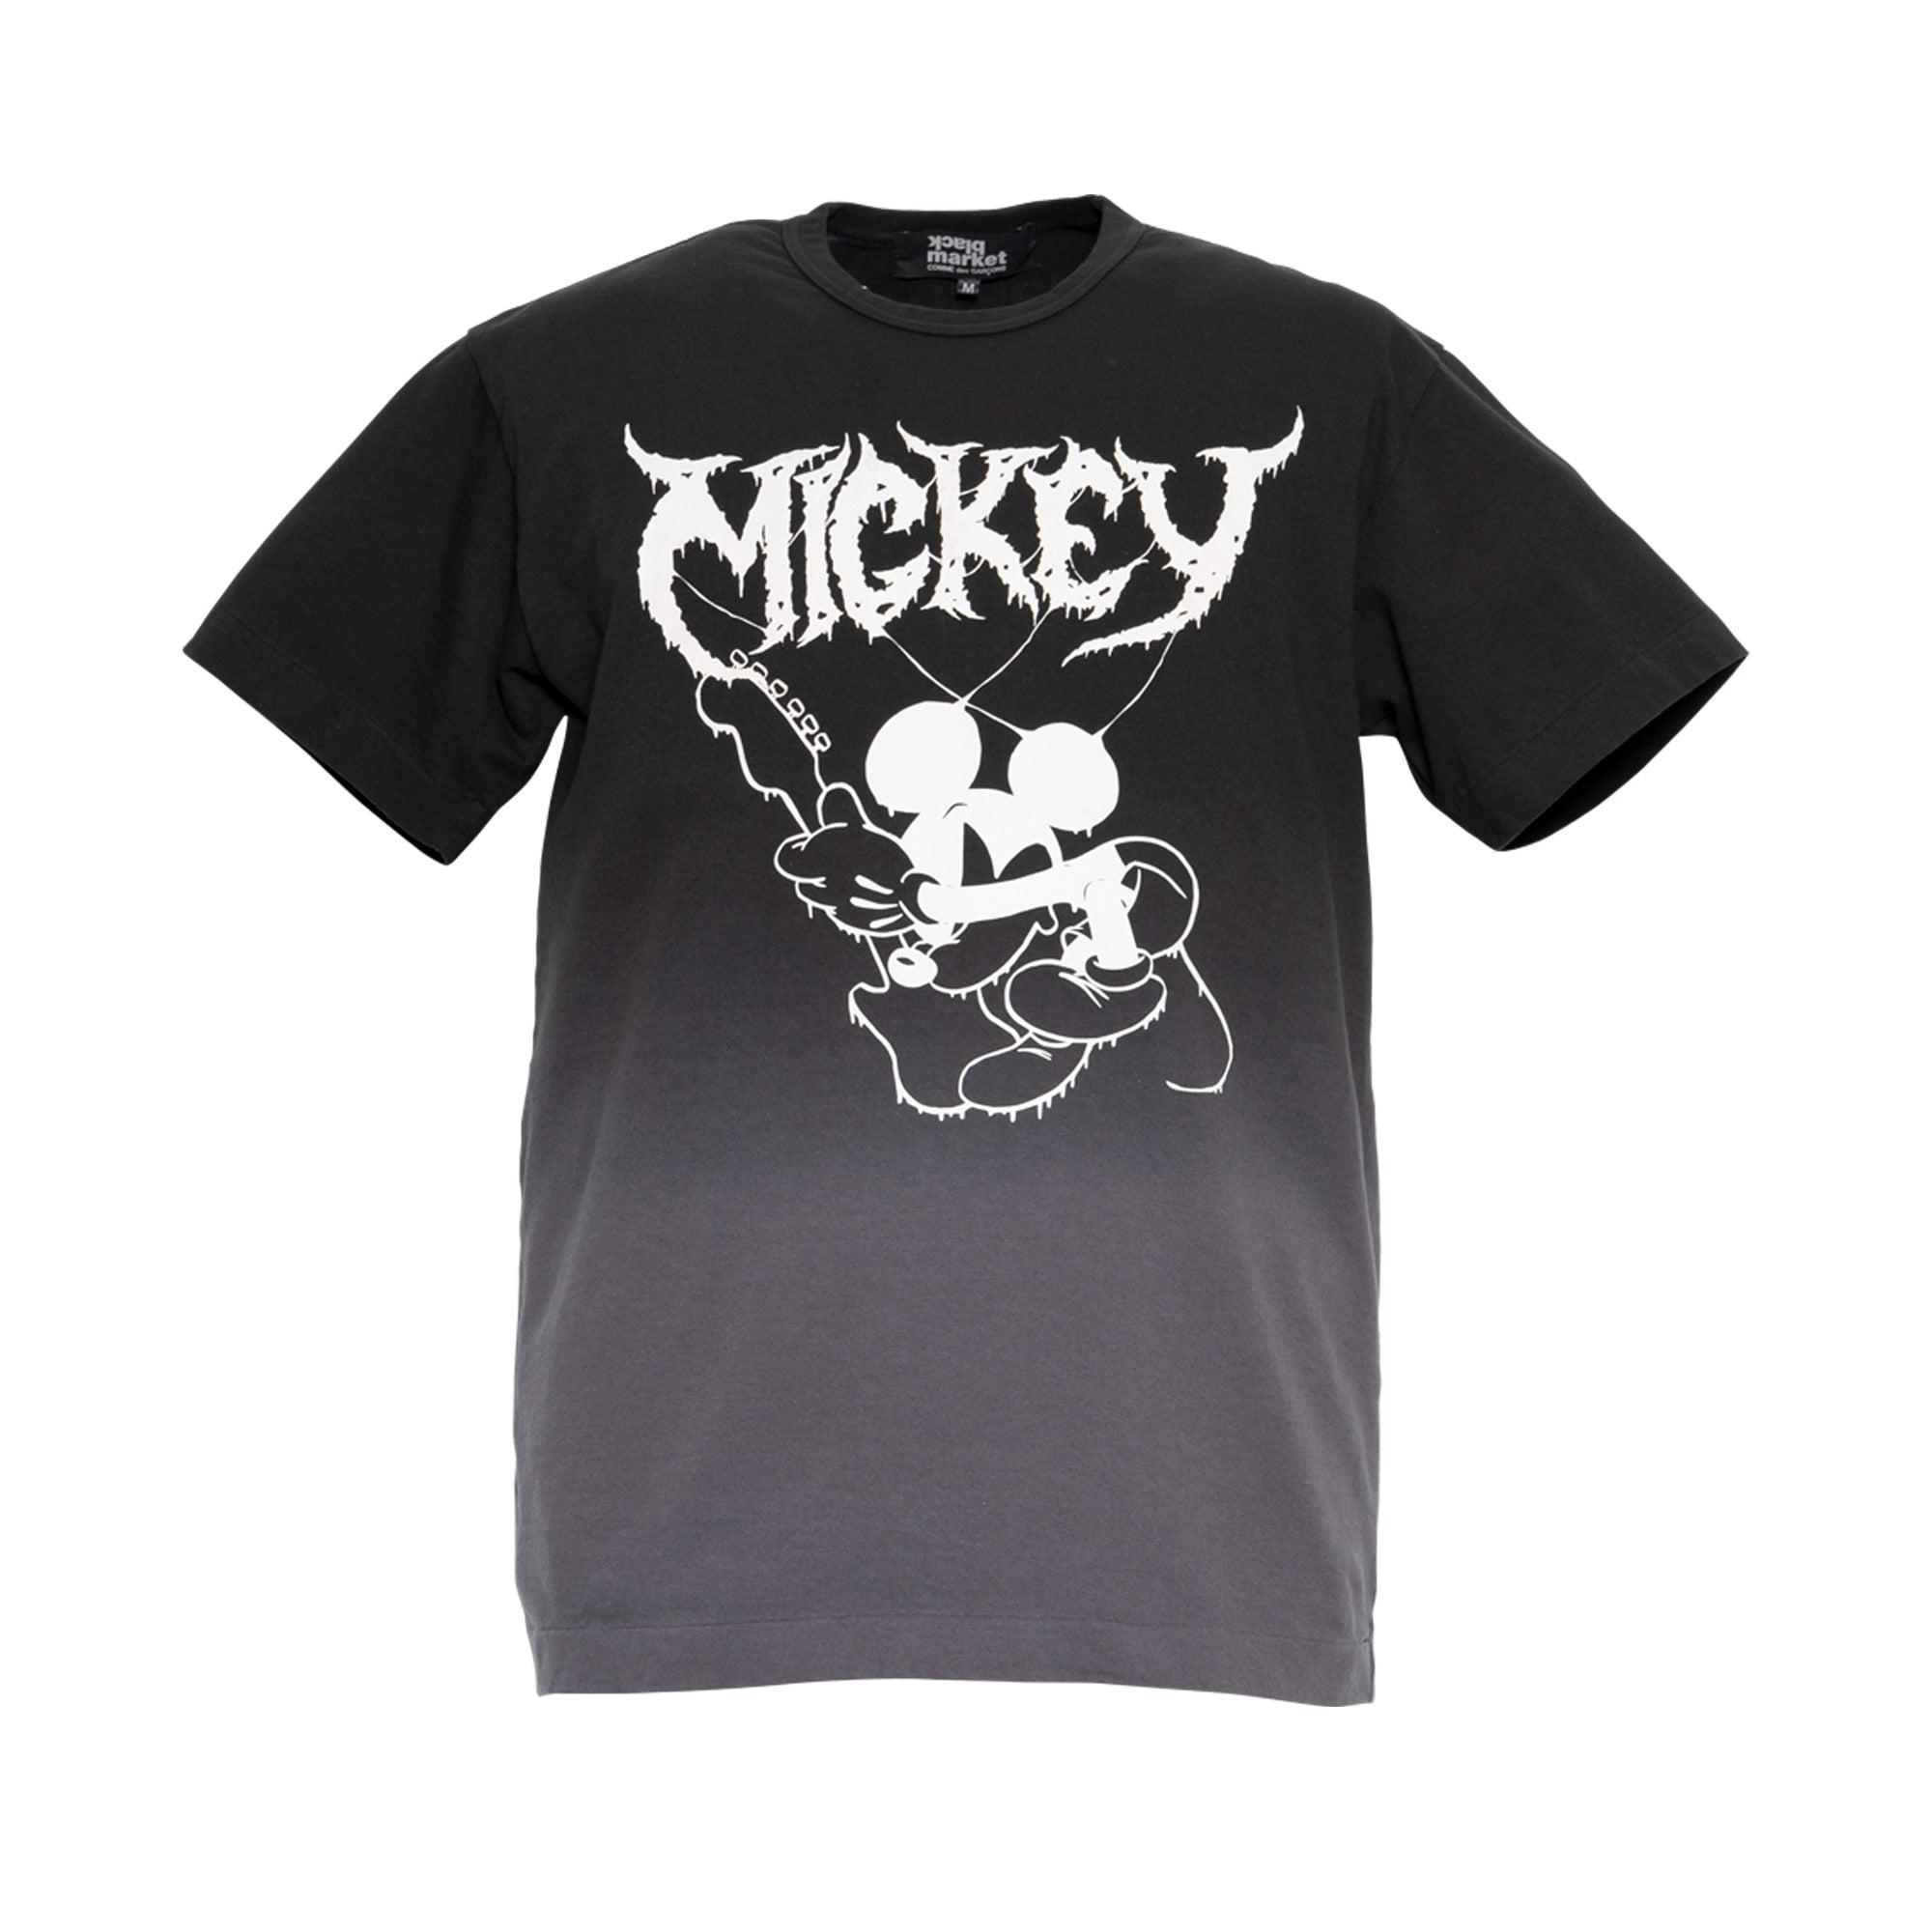 Comme des Garçons Black Market x Disney Mickey T-Shirt (Black) by BLACK MARKET